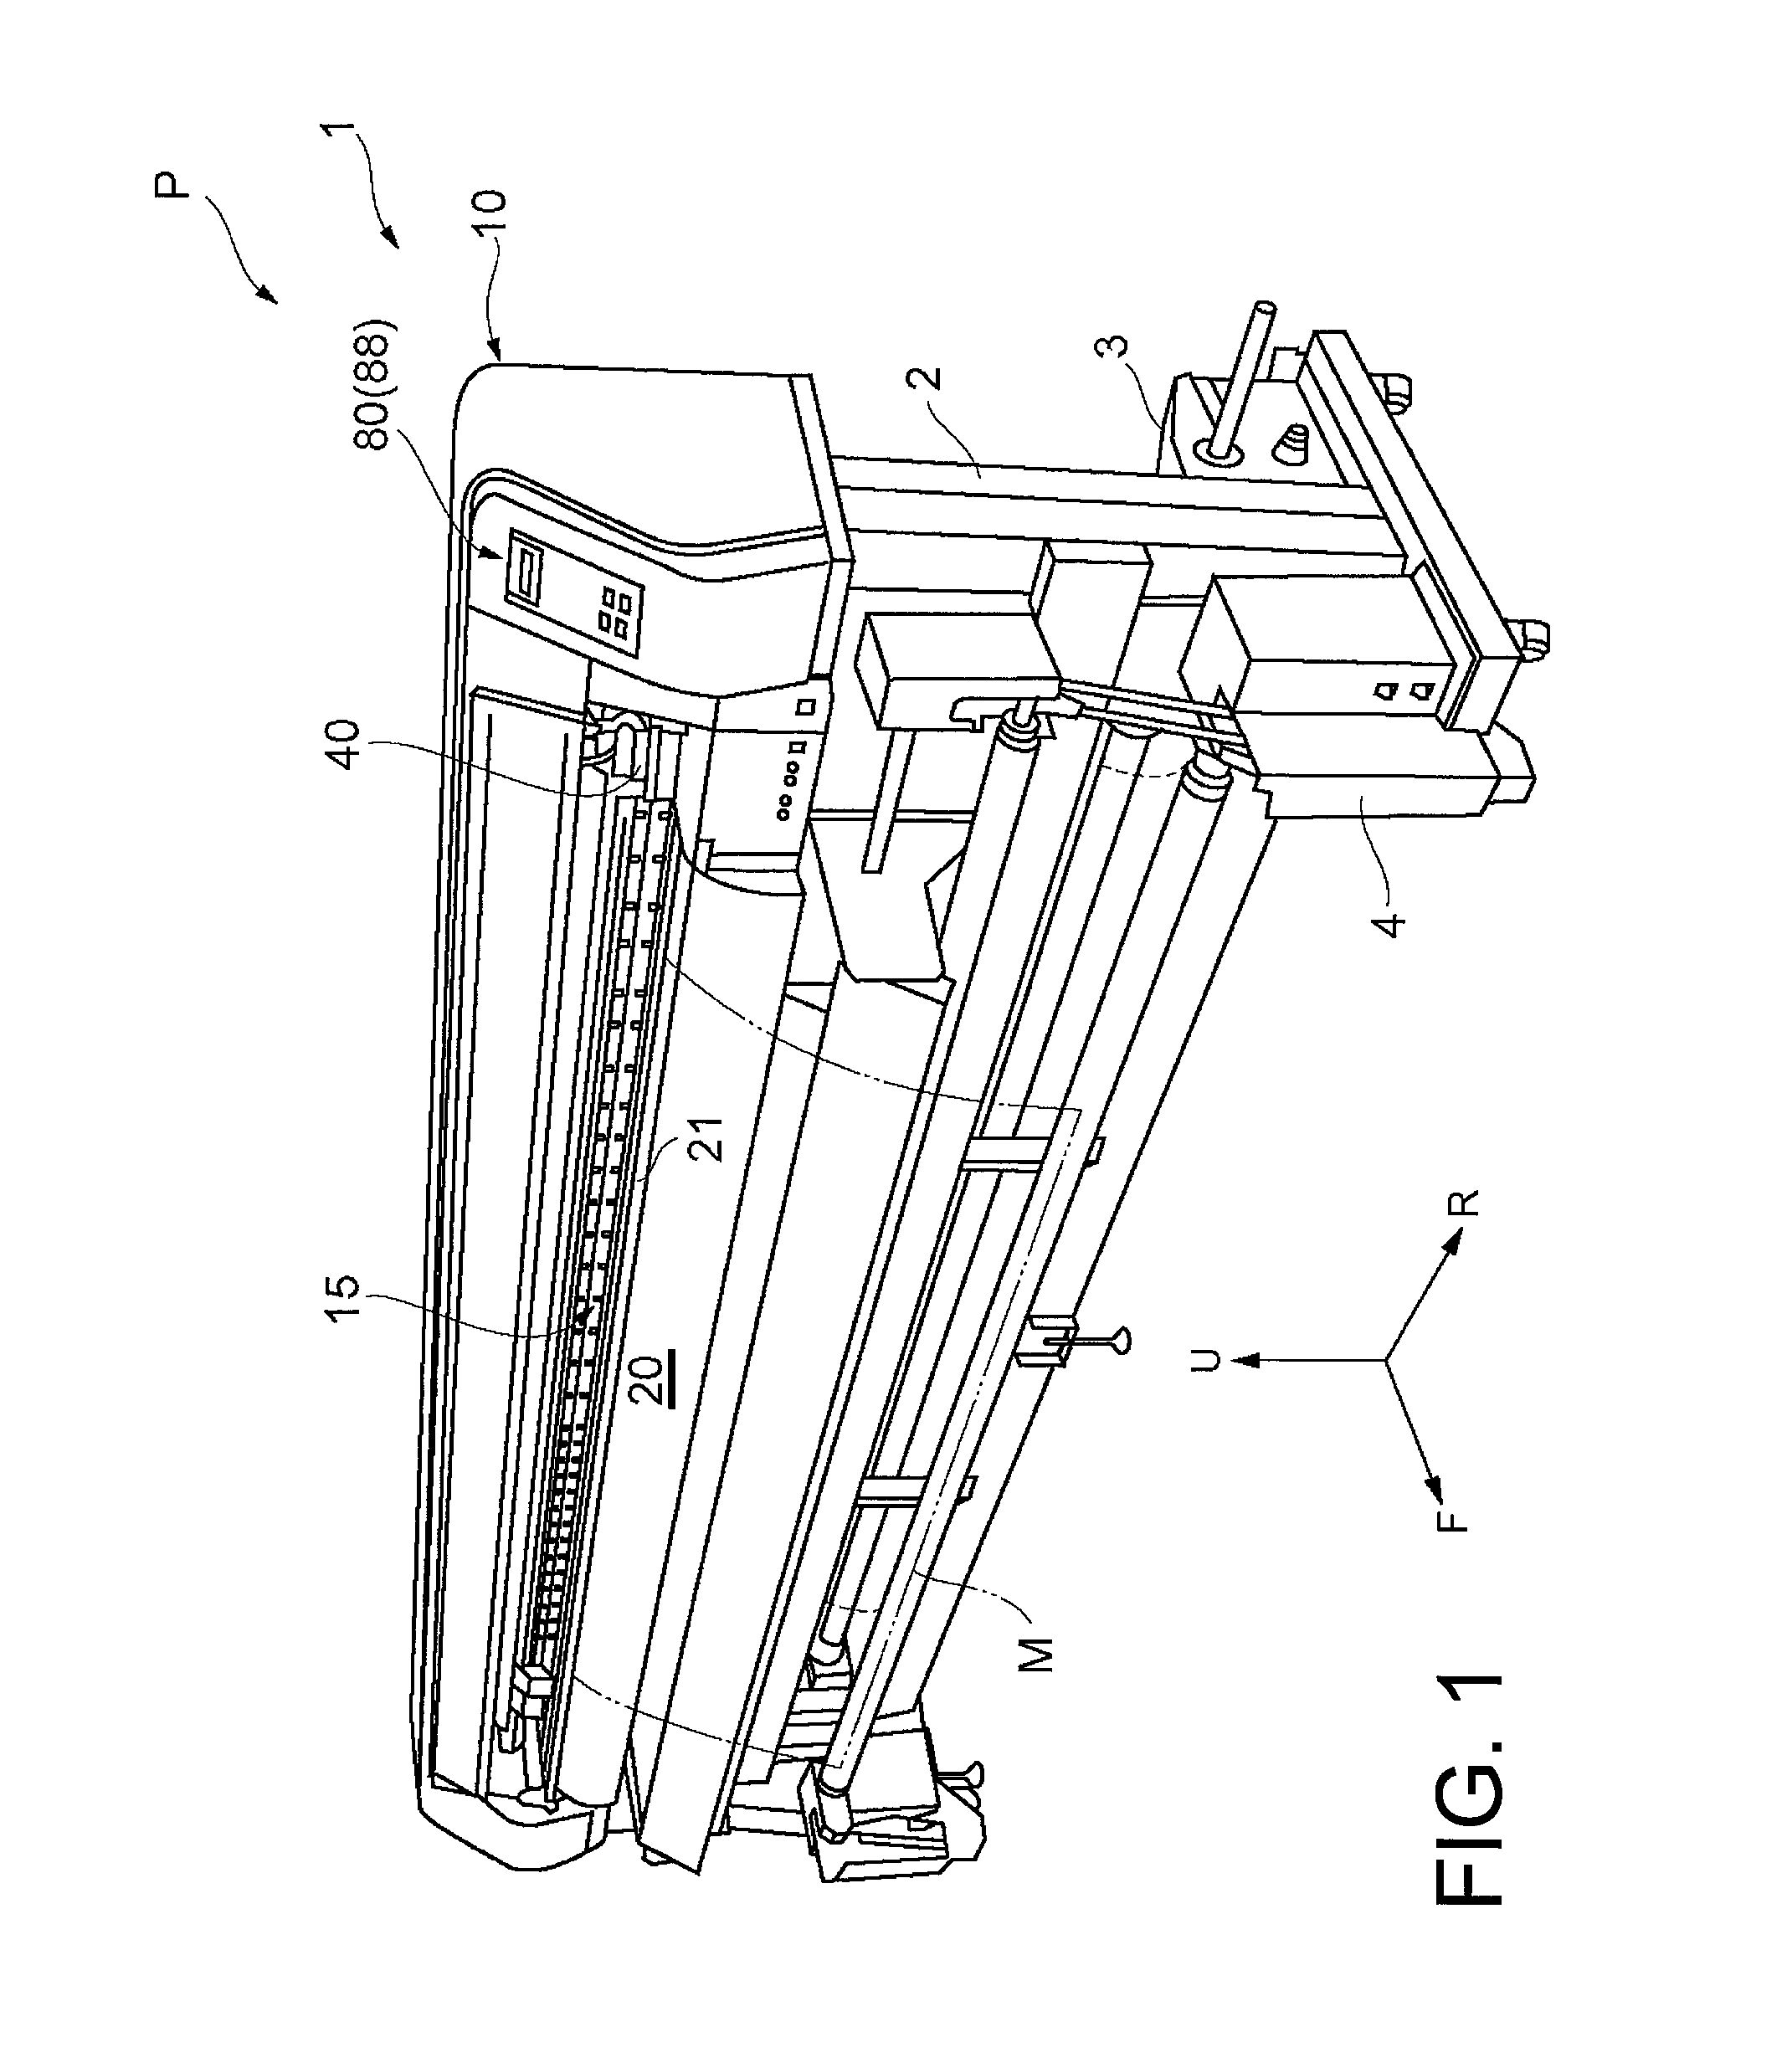 Damper apparatus, damper tube assembly, and ink jet printer